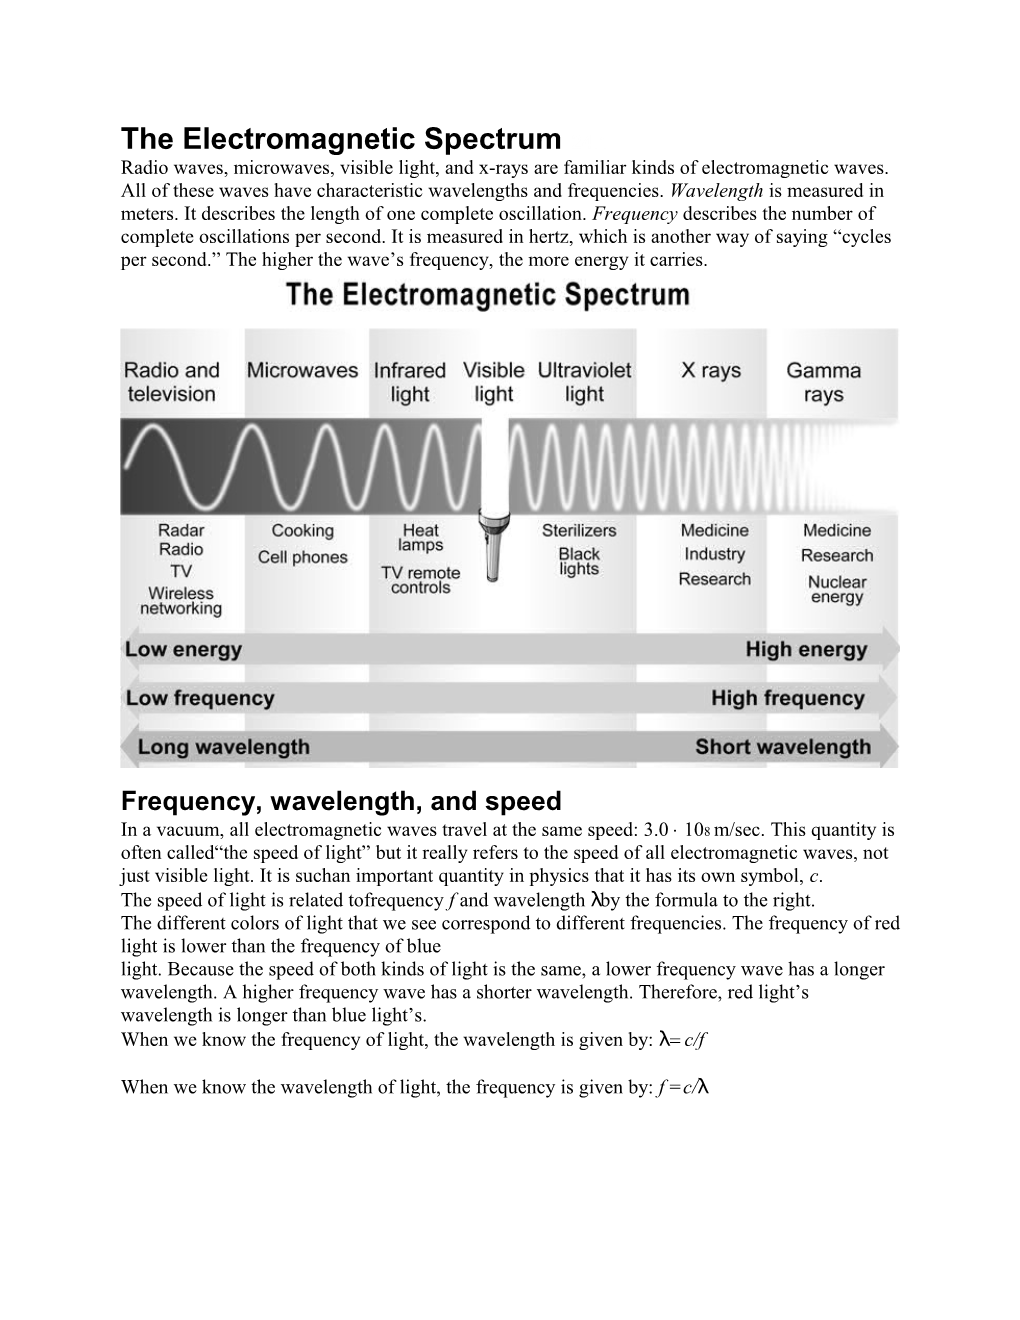 The Electromagnetic Spectrum 24.1